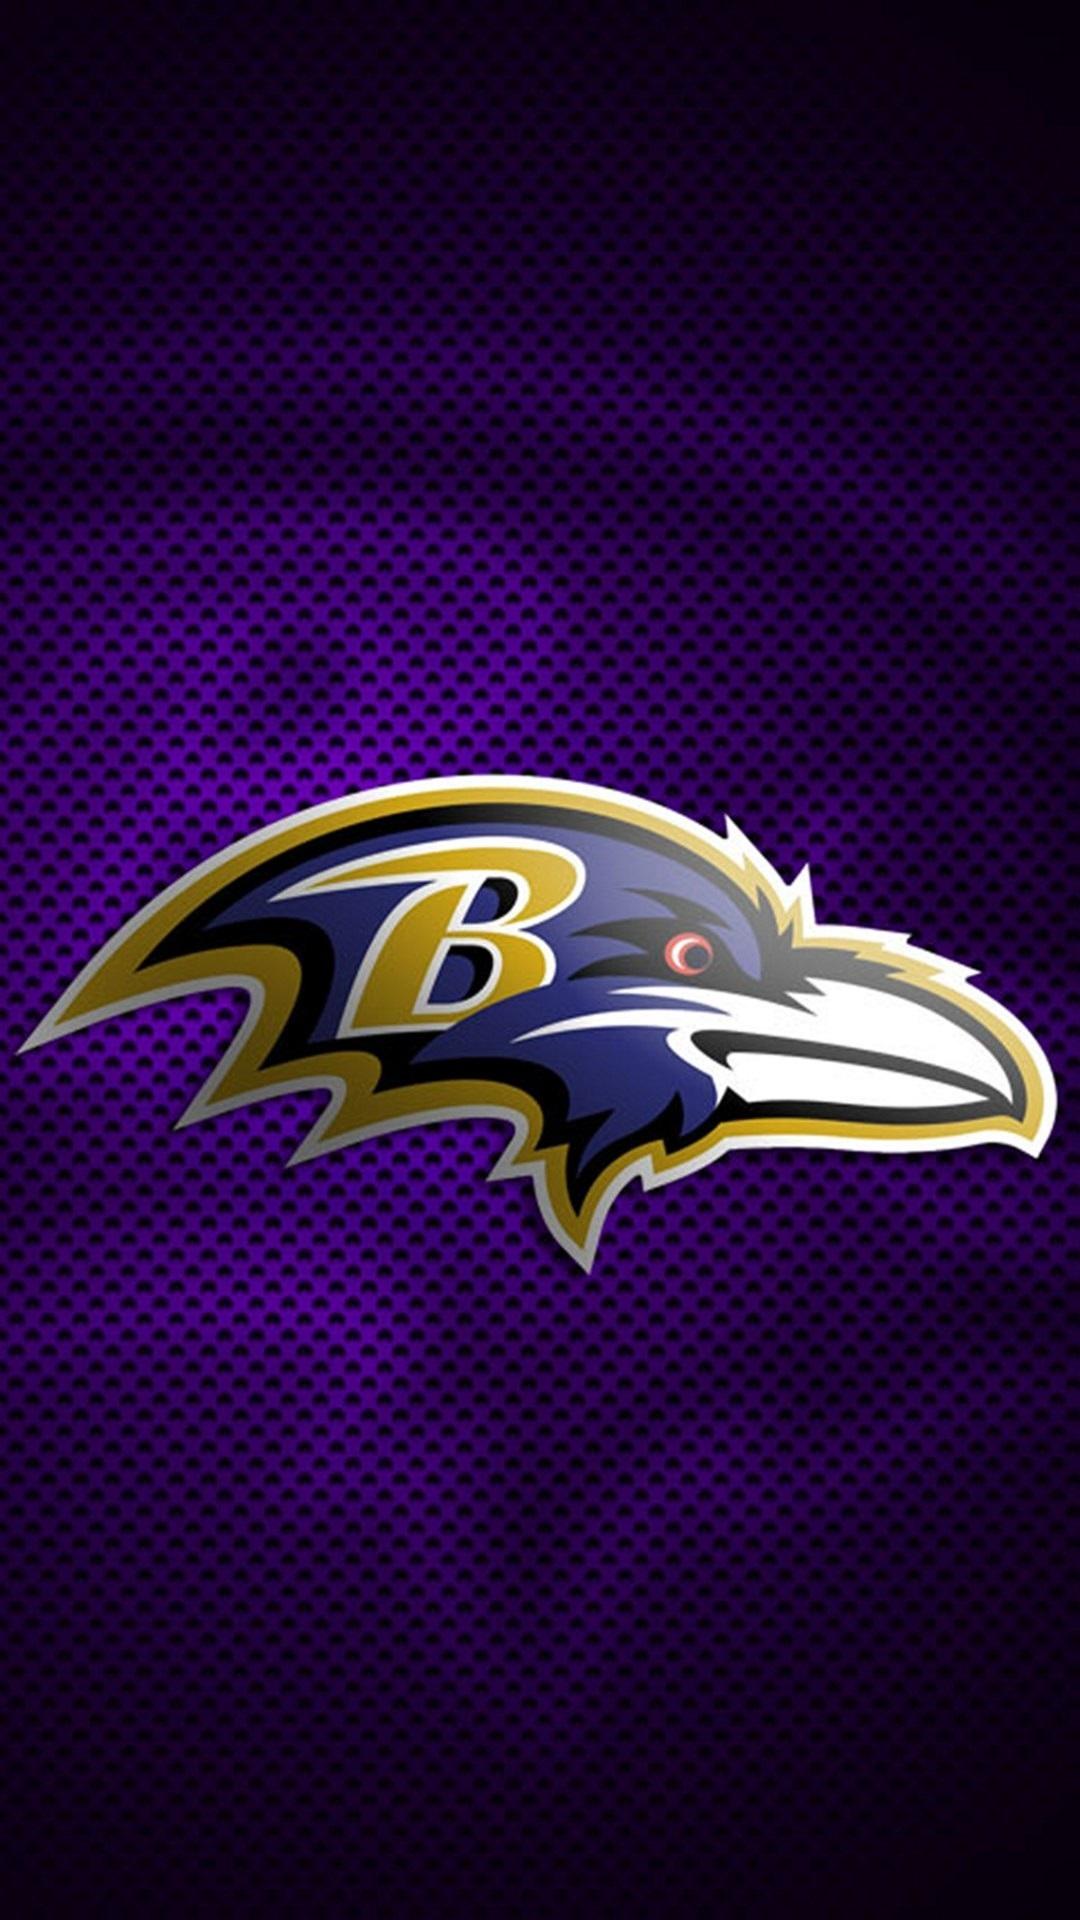 Baltimore Ravens iPhone Wallpaper NFL Wallpaper